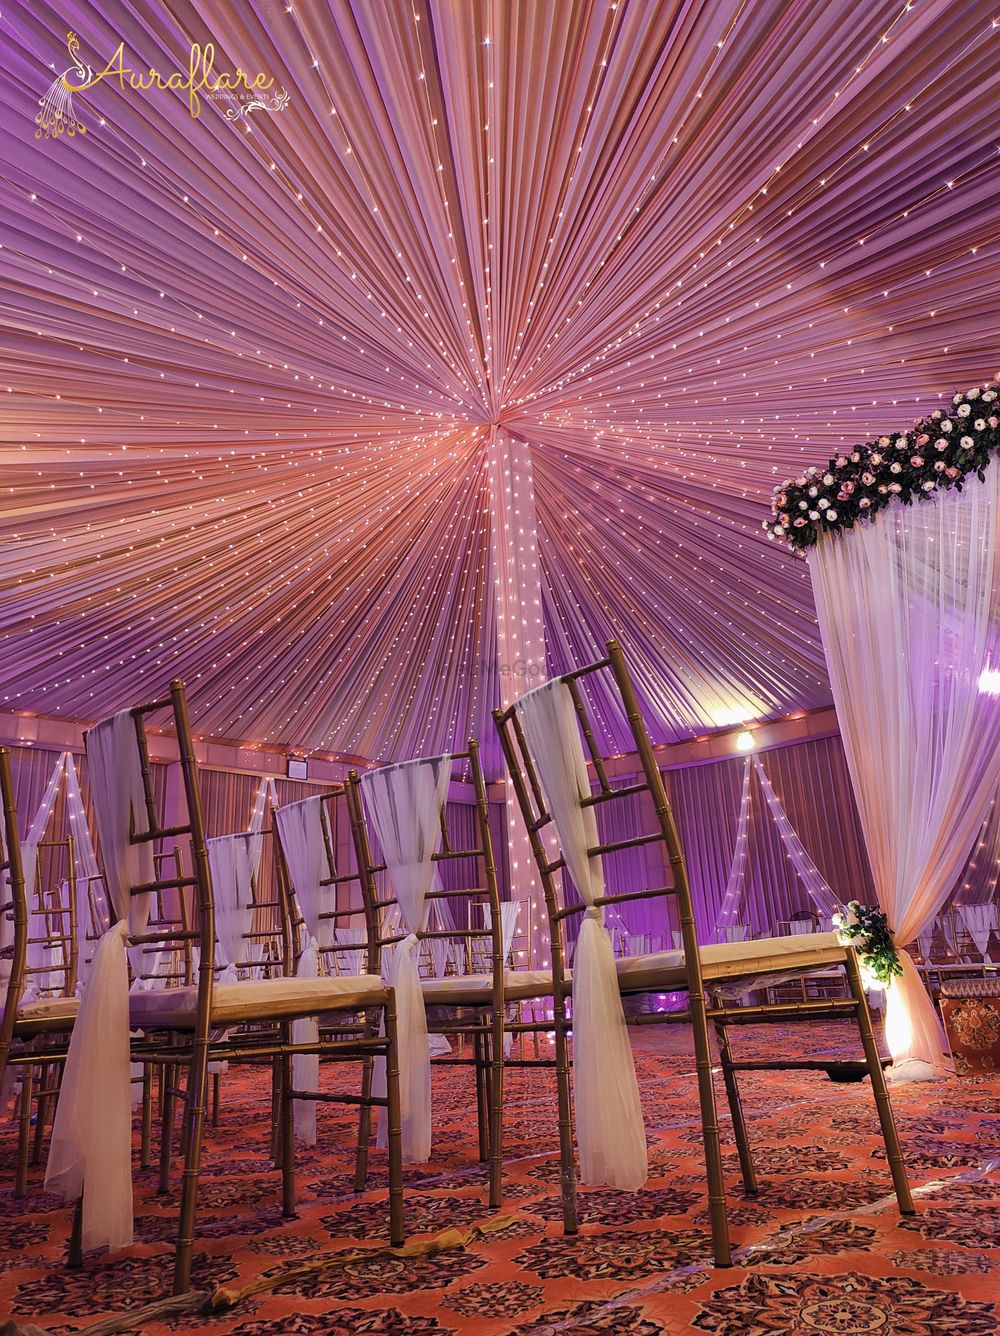 Photo By Auraflare Weddings & Events - Decor - Decorators